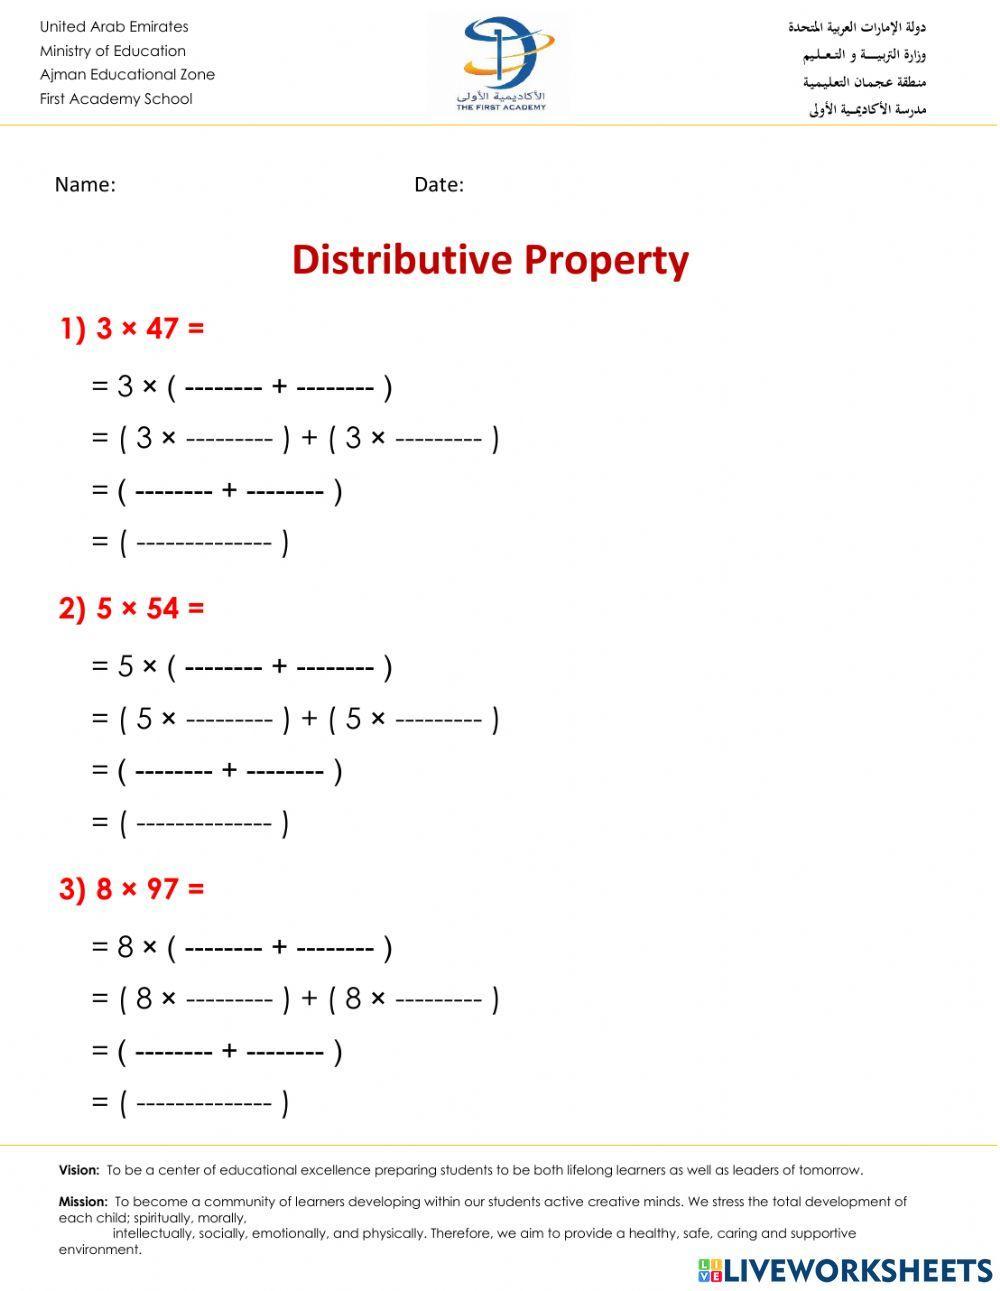 Distributive Property